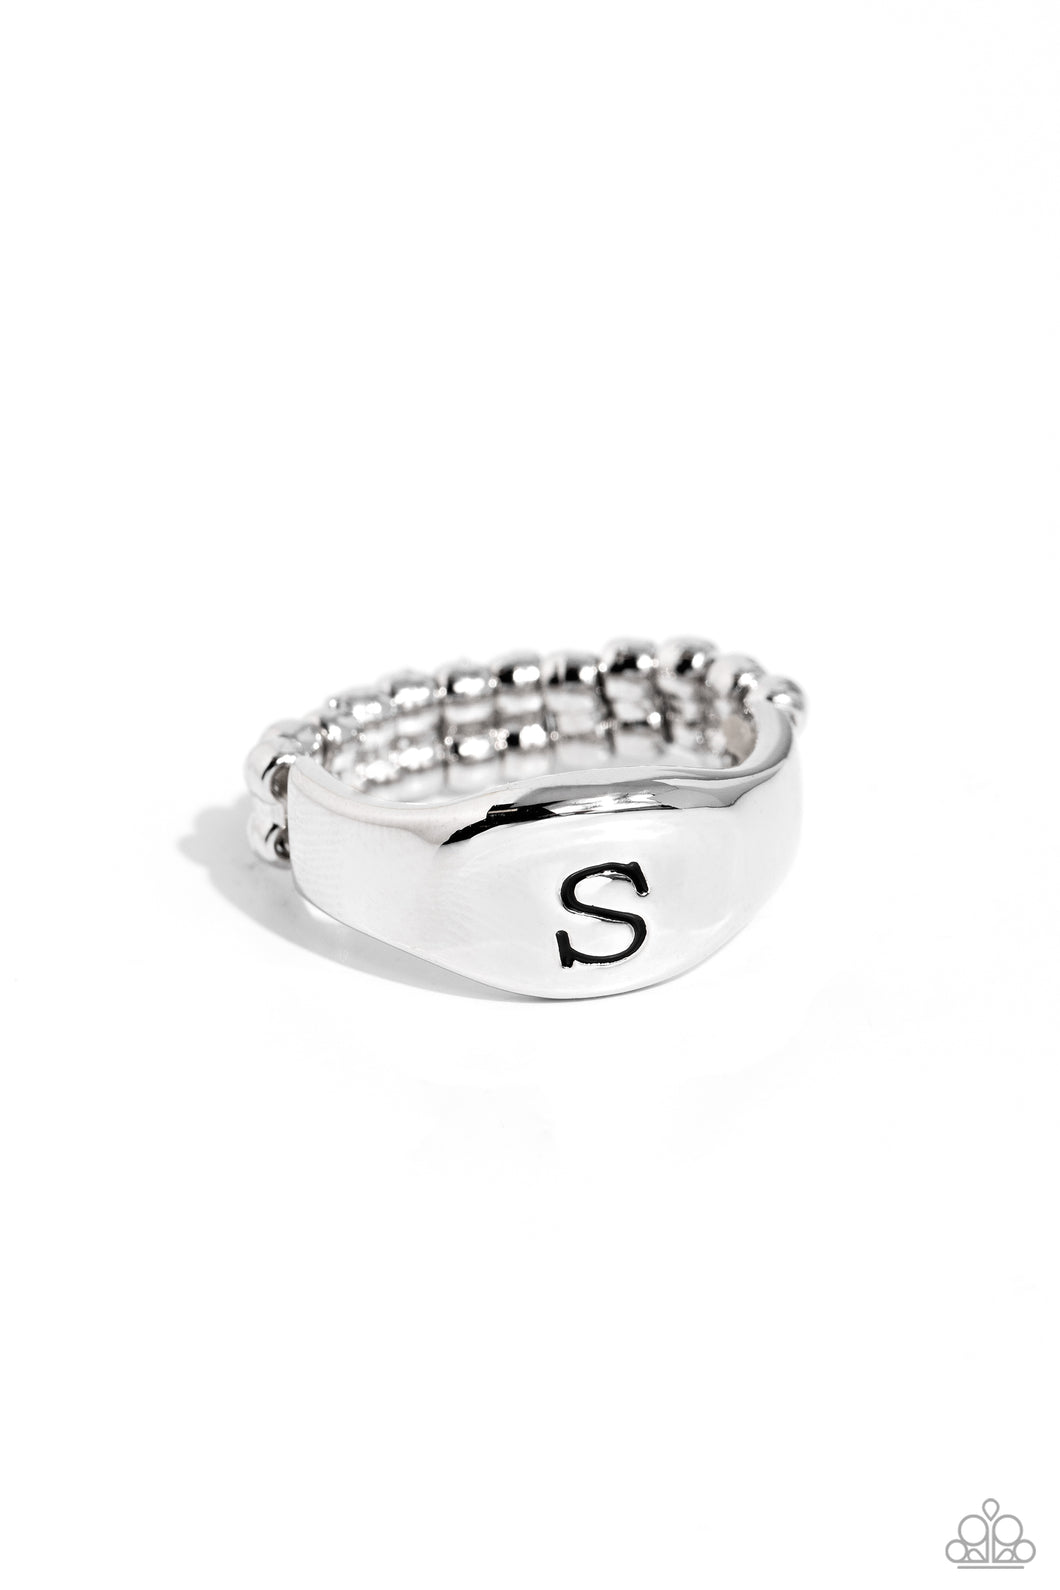 Monogram Memento - Silver - S Initial Ring